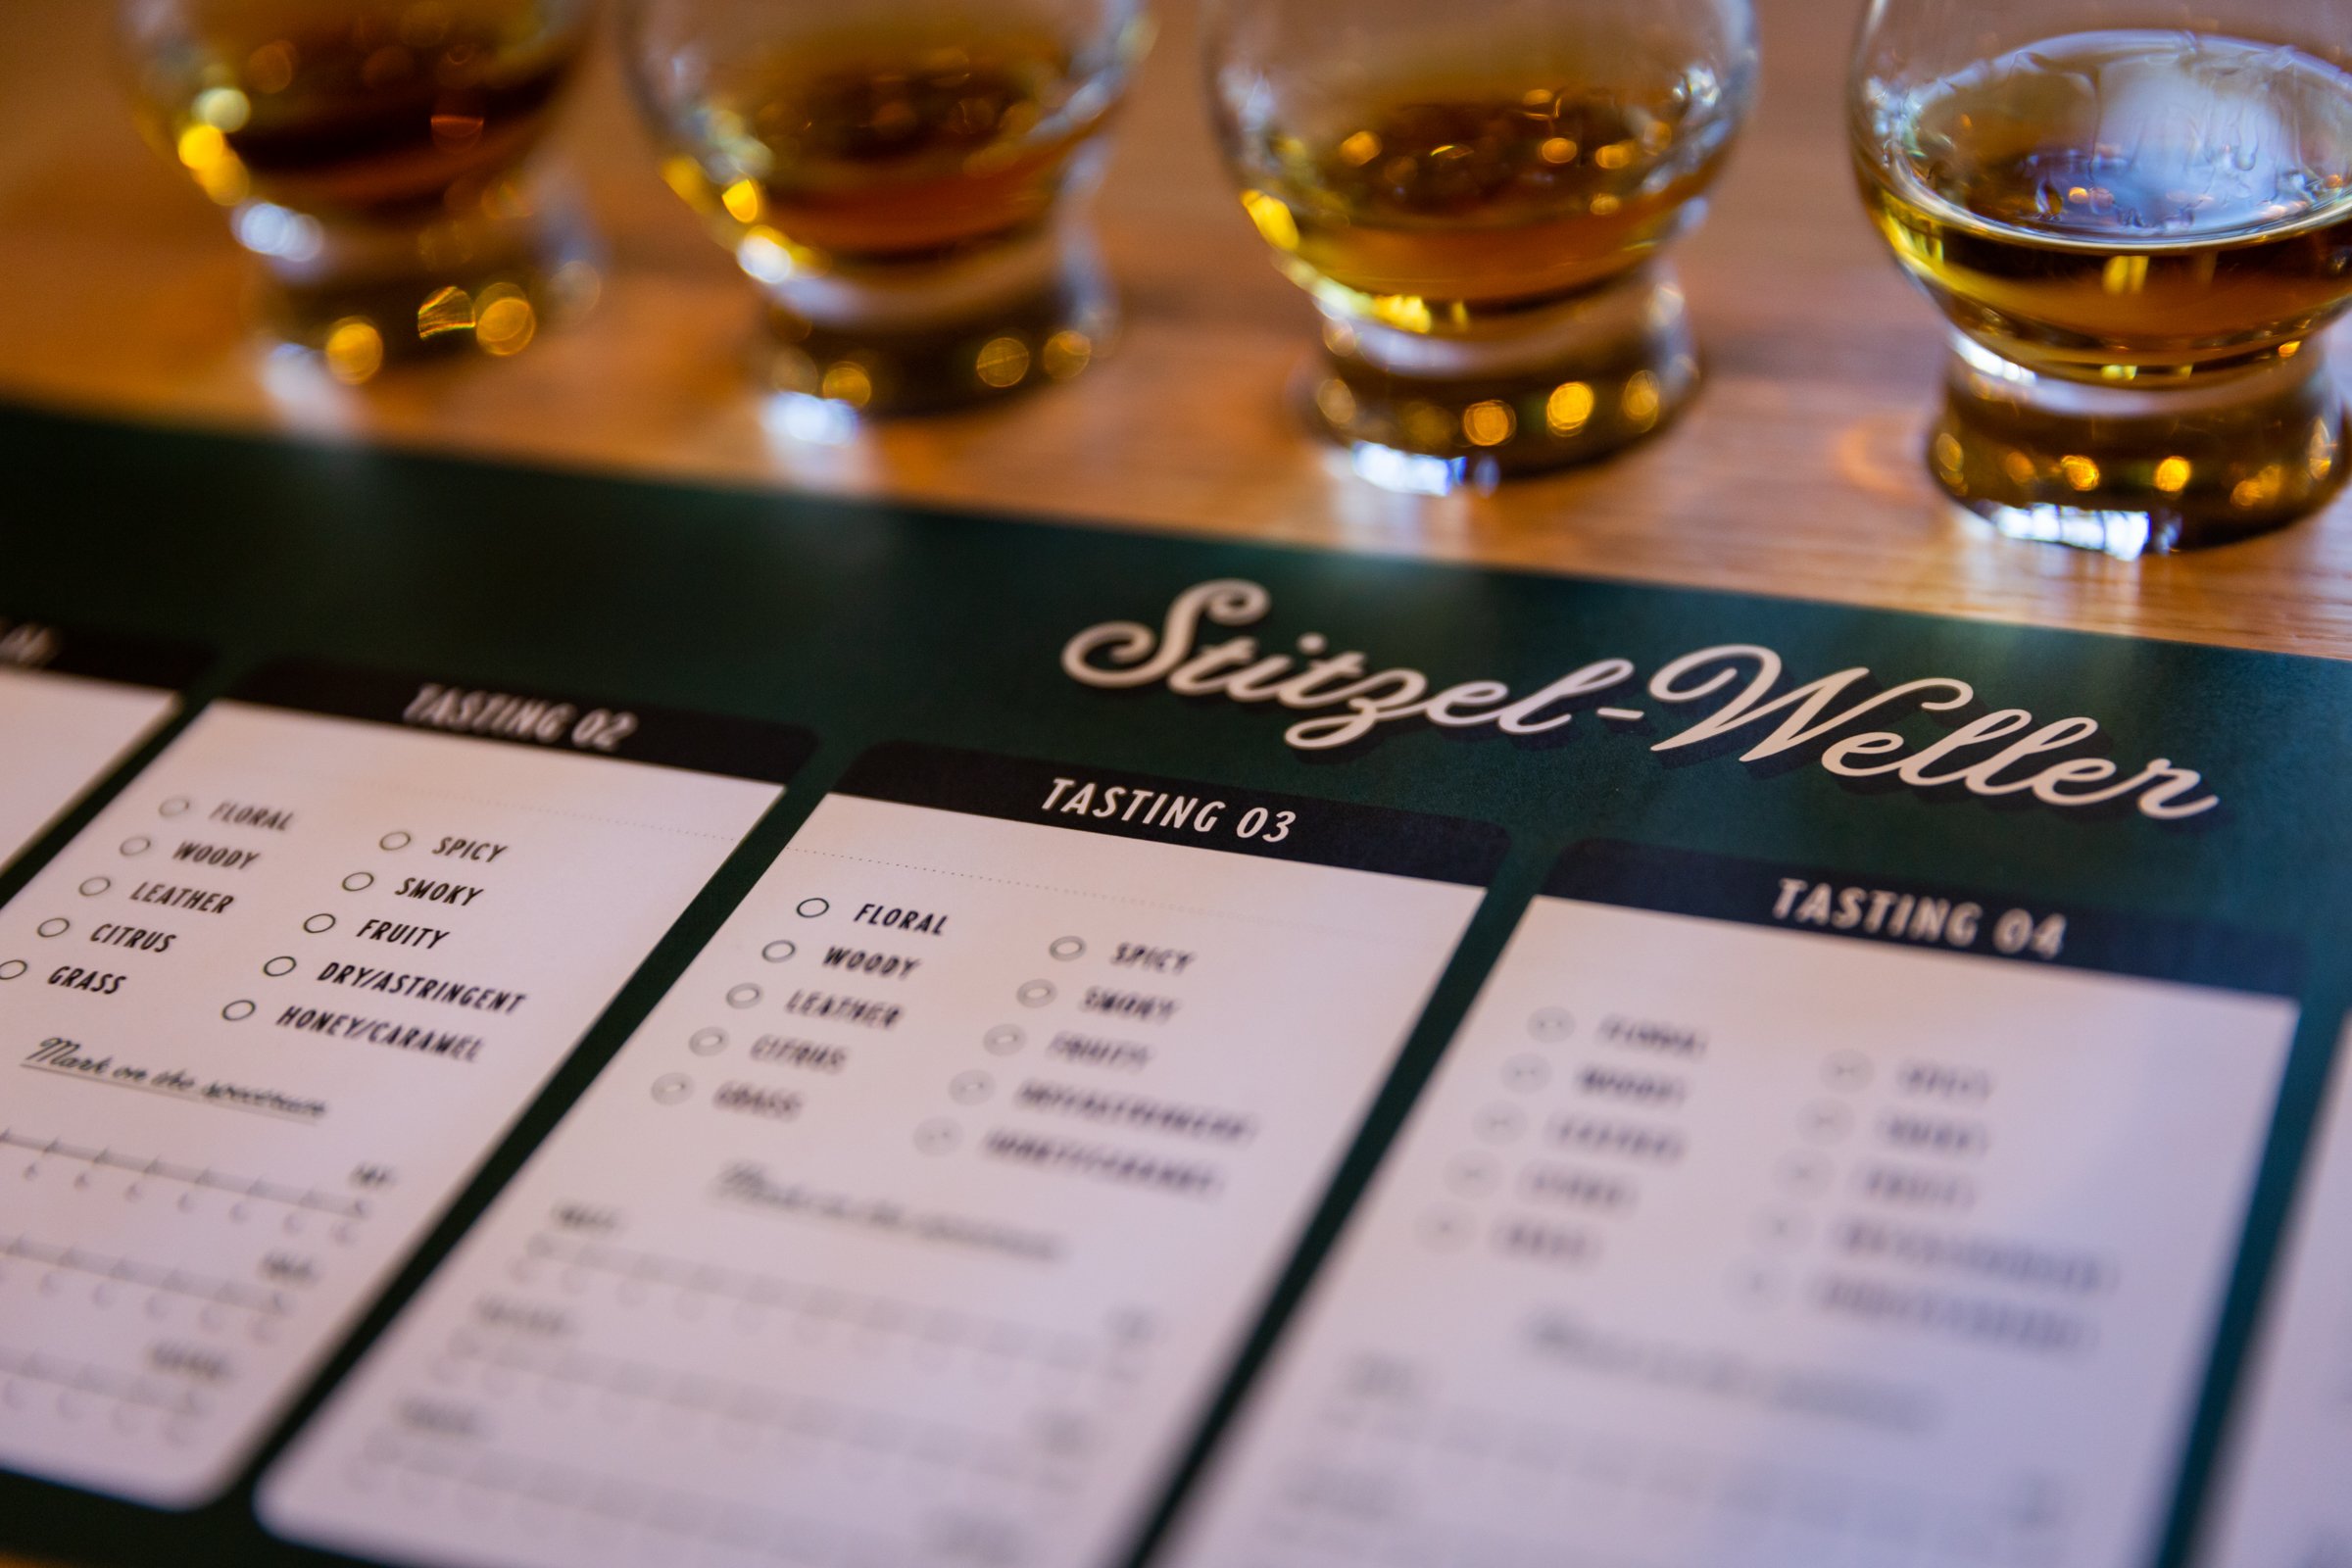 Photograph of a Burbon tasting menu.